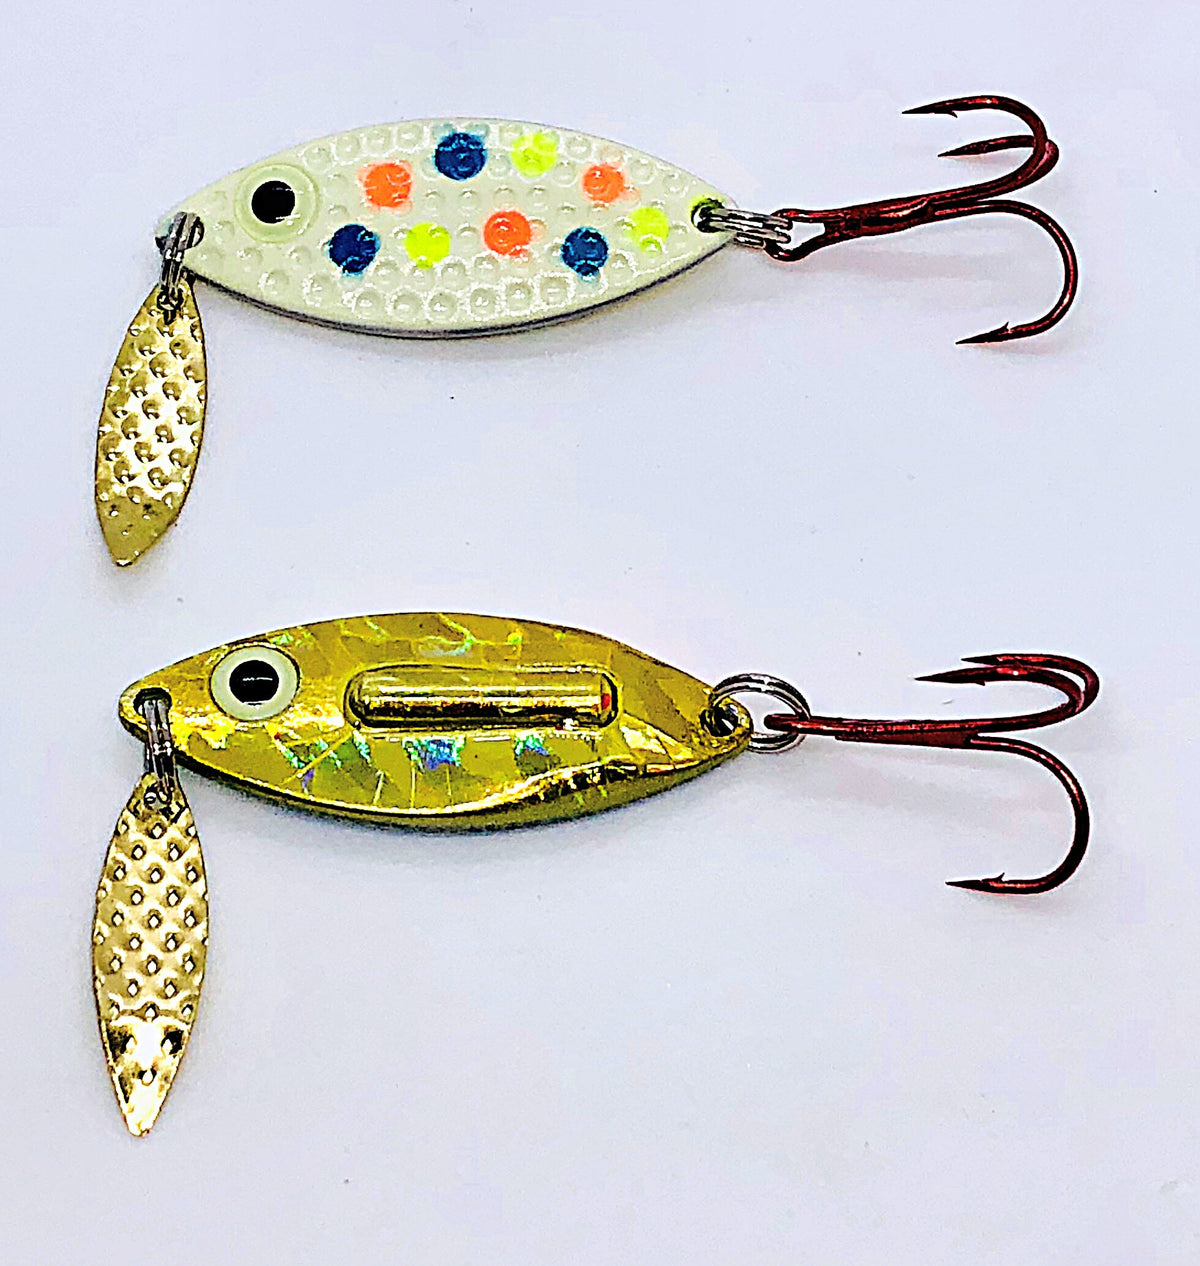 Hongchun 30 Pieces Fishing Spoons Trout Perch Pike Lures Baitfish